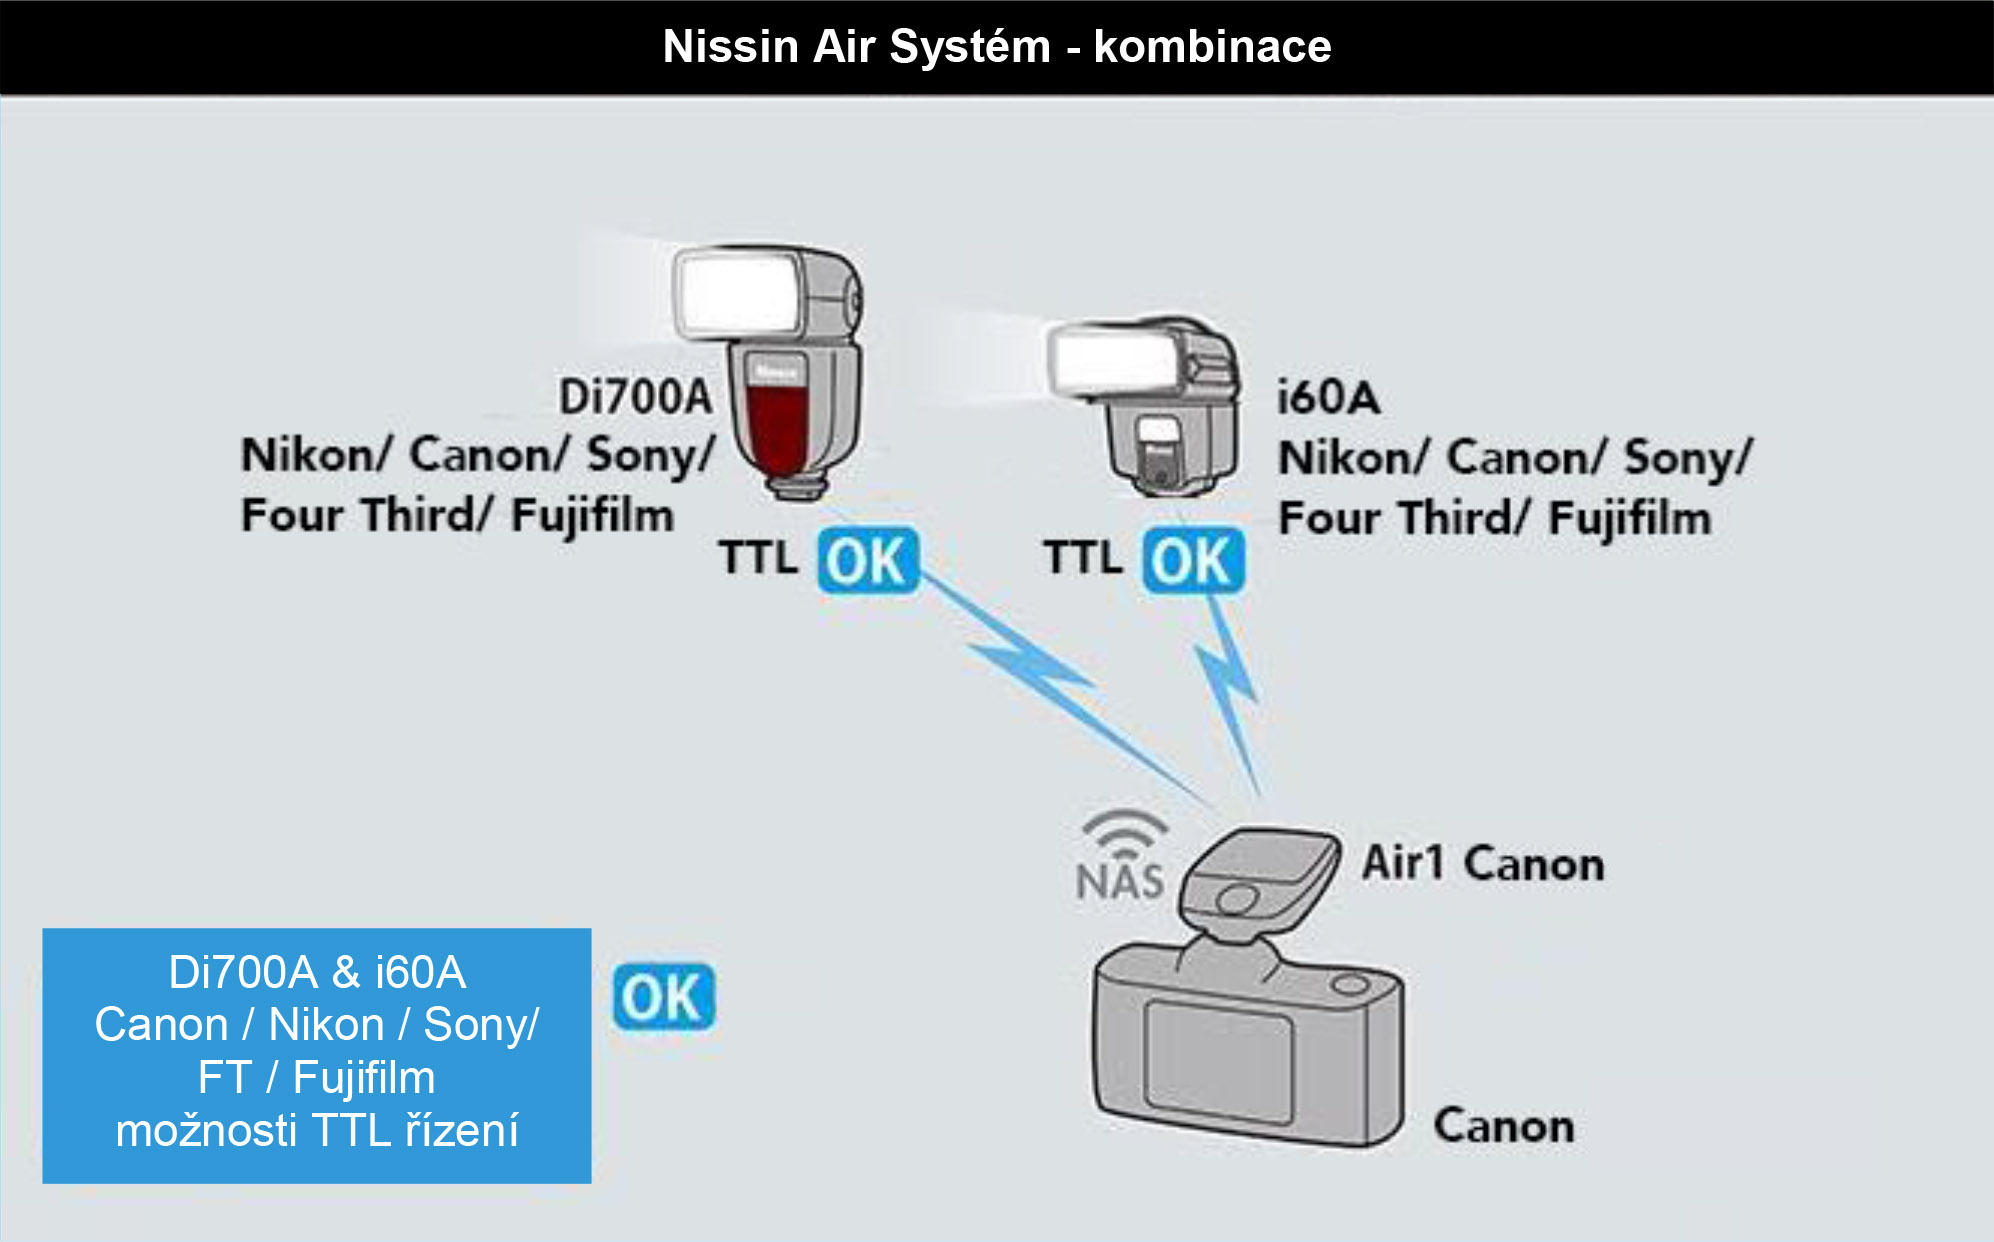 Nissin Air System (NAS) - kompatibilita 